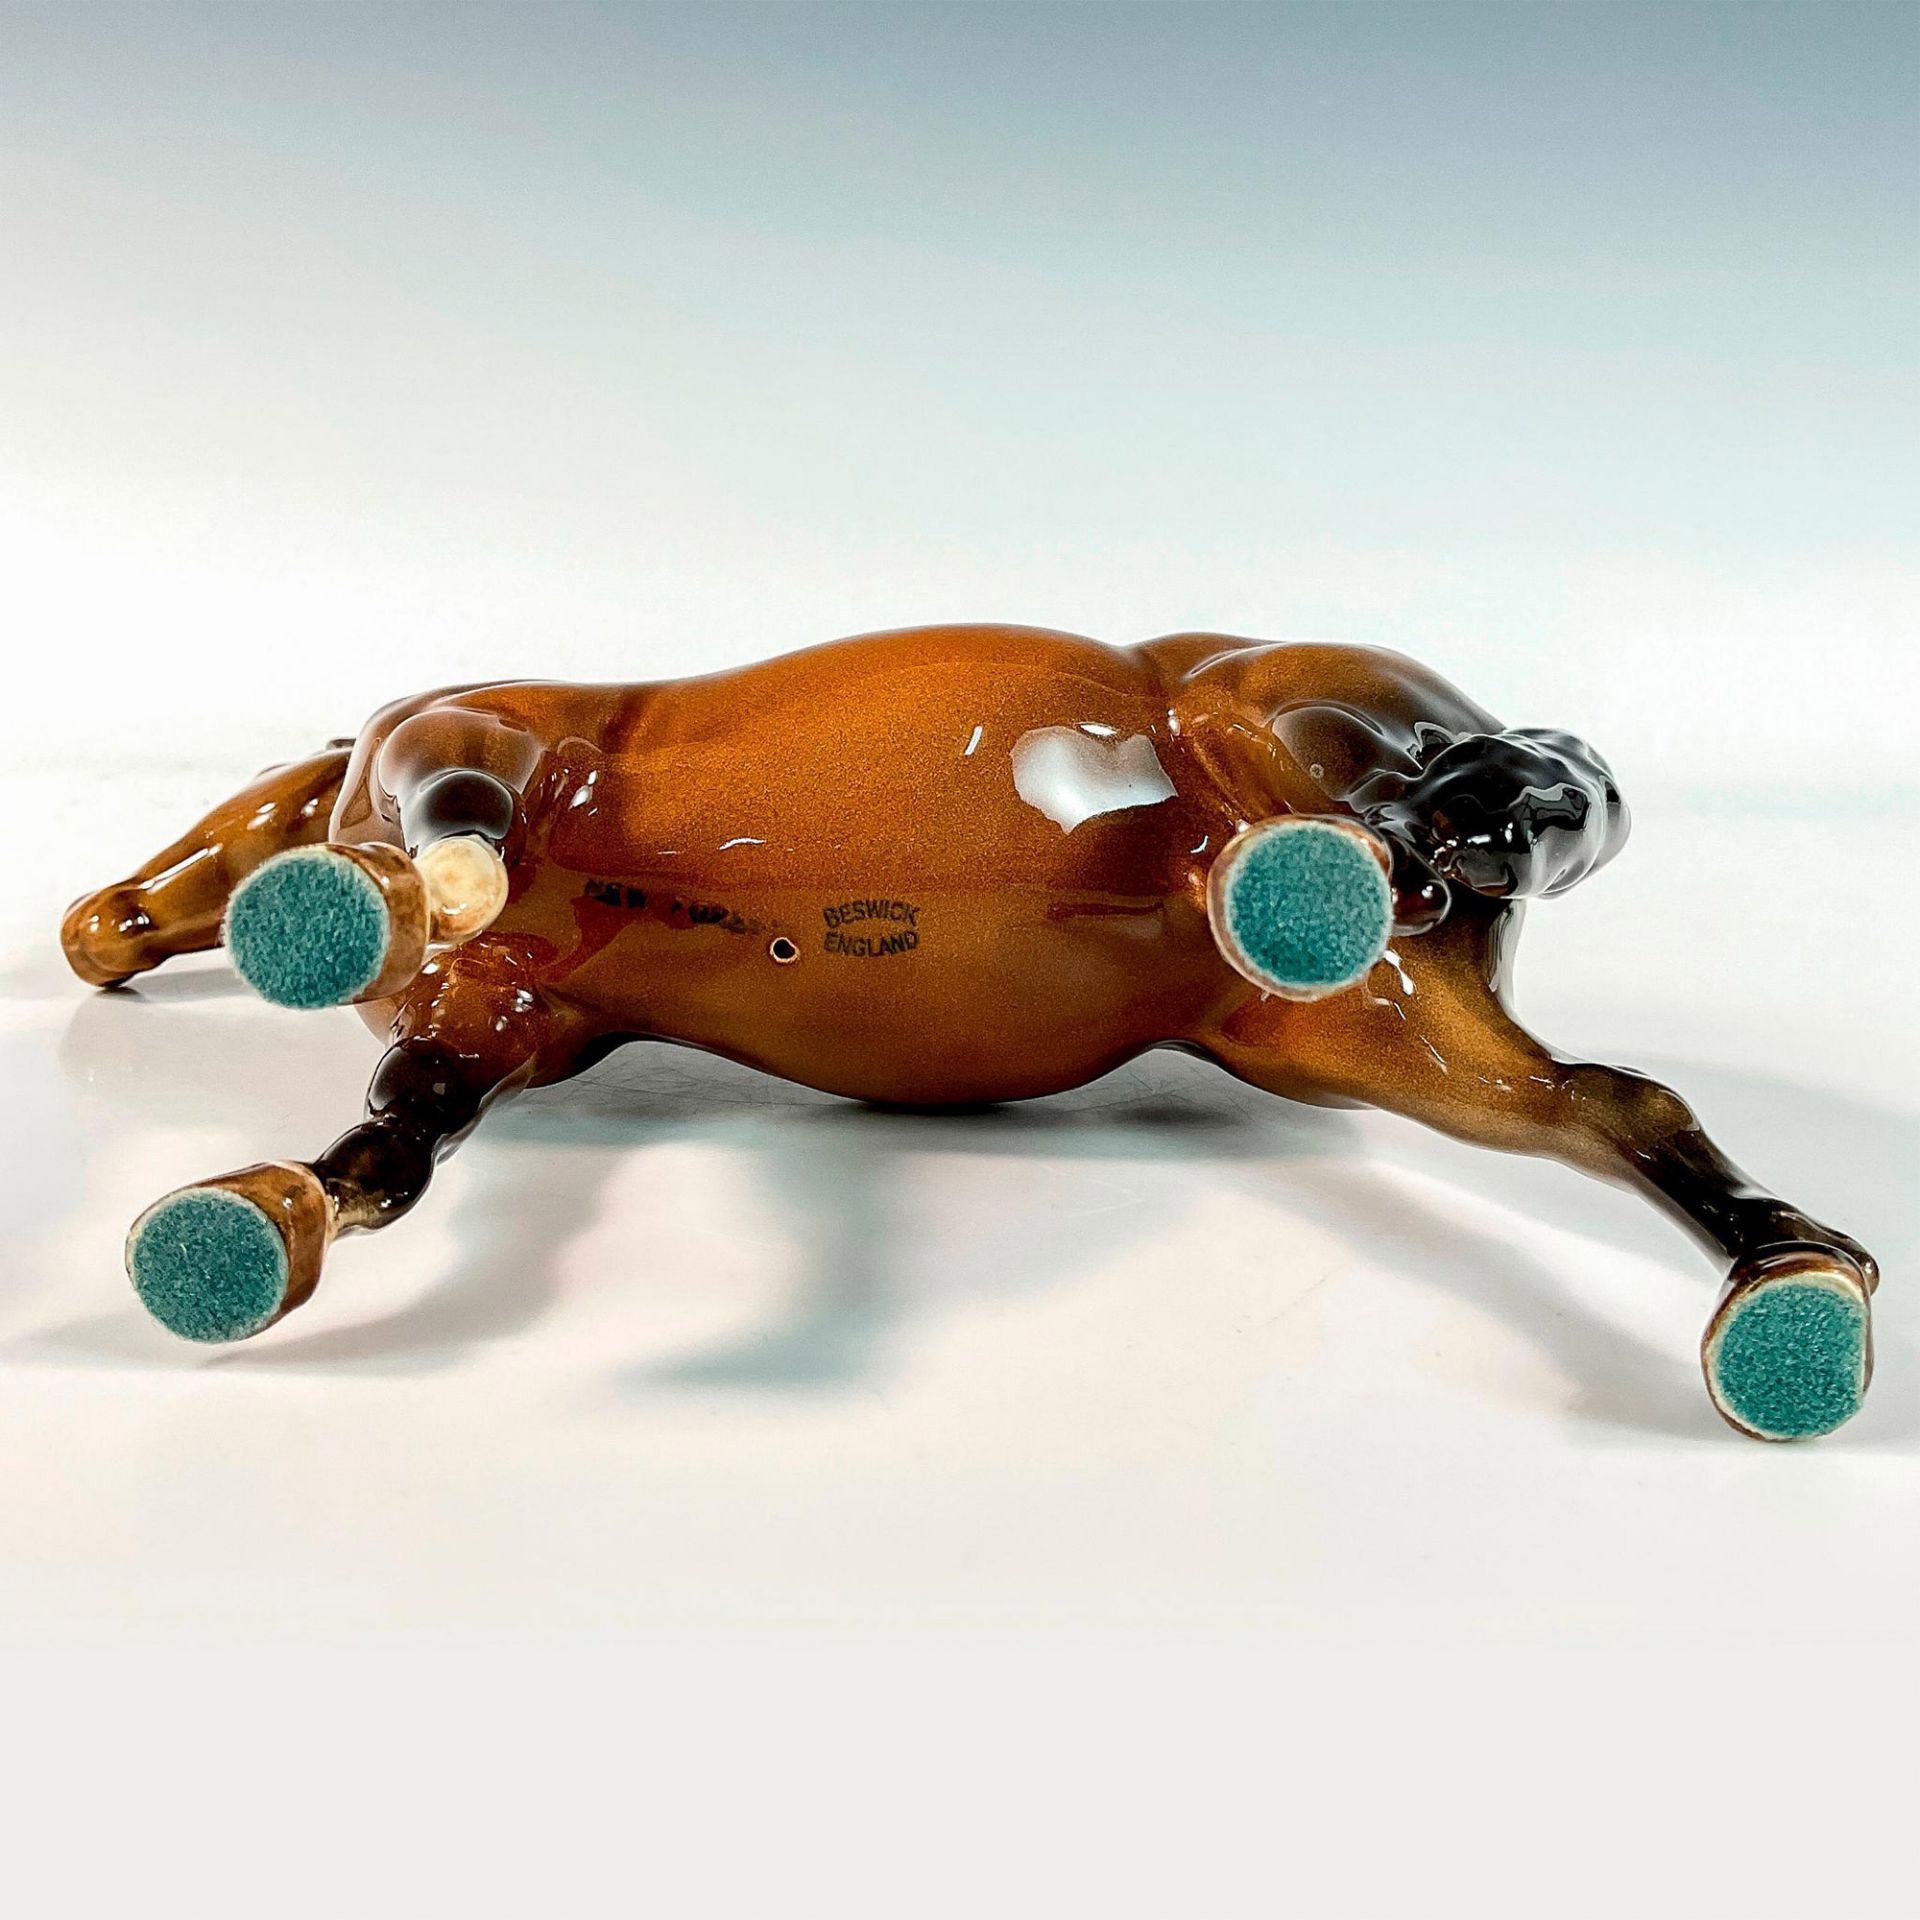 Beswick Figurine, New Forest Pony - Image 3 of 3